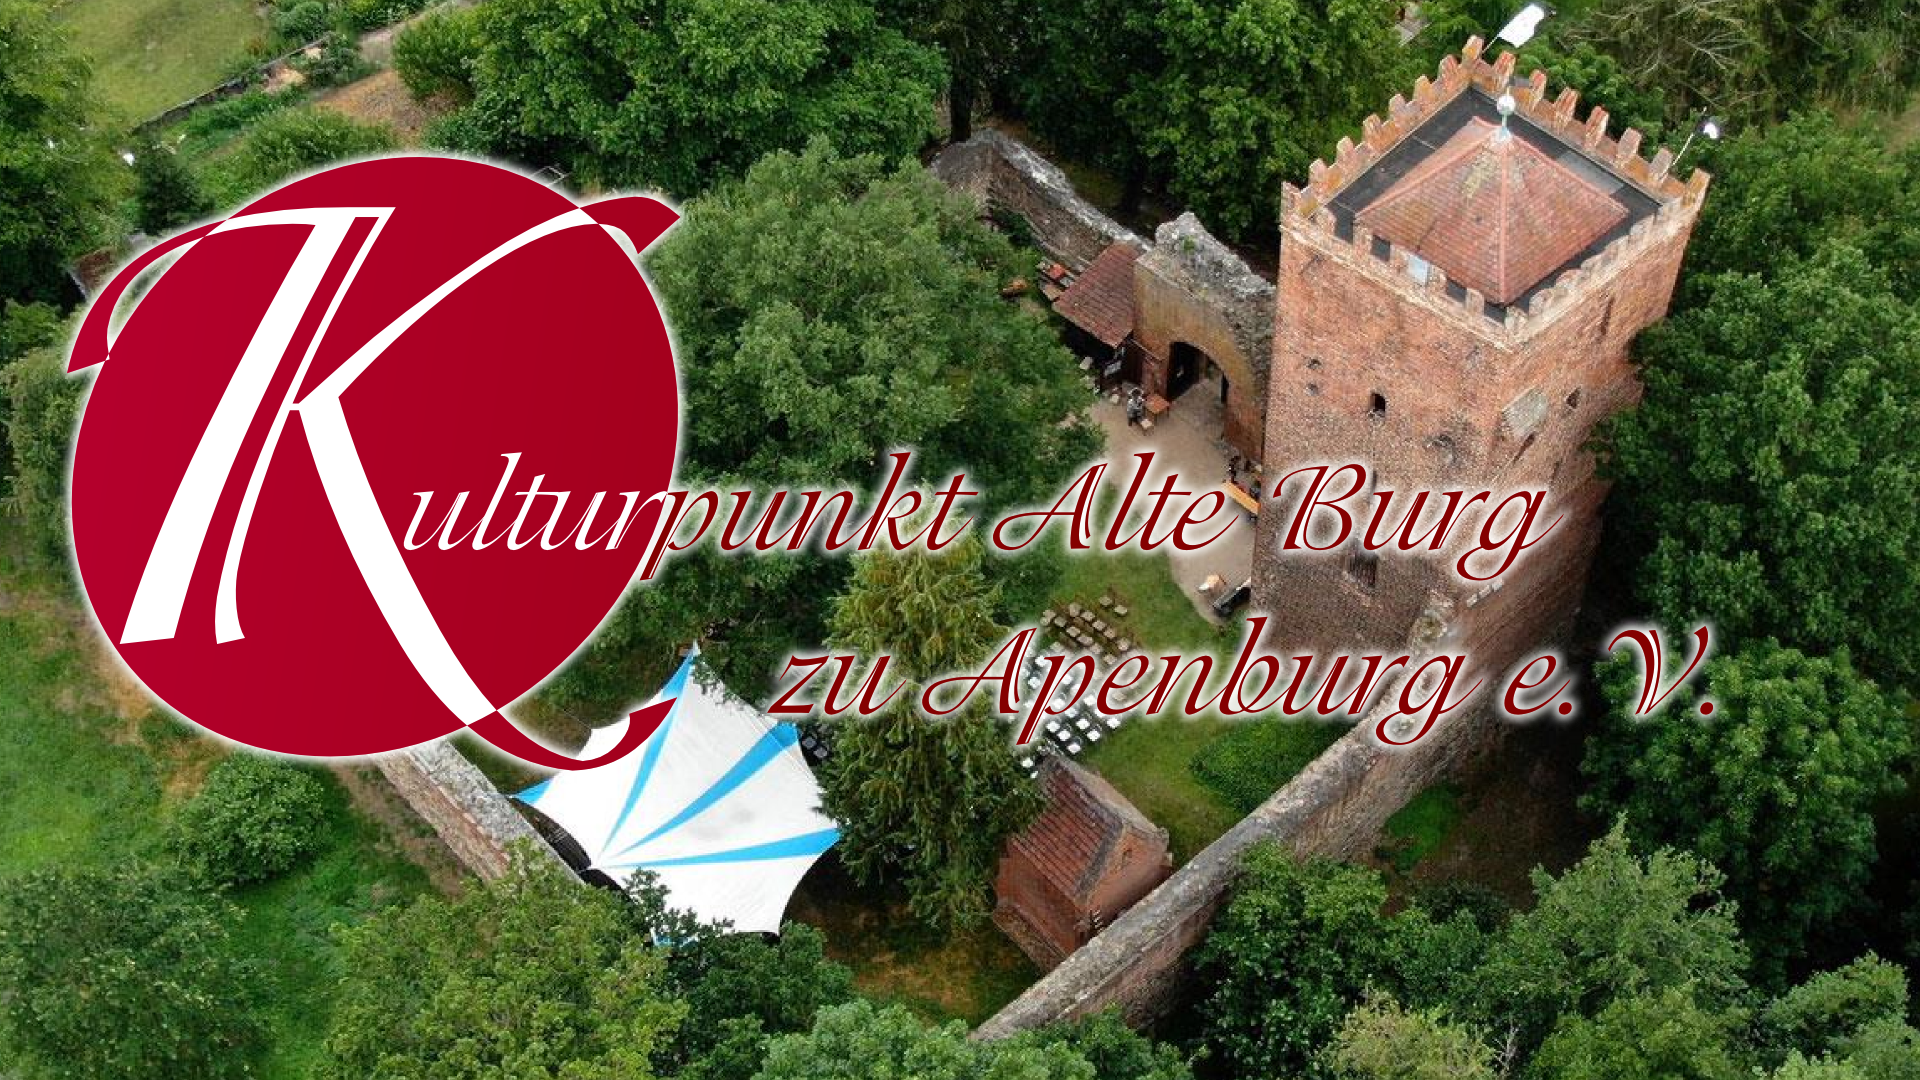 (c) Kulturpunkt-apenburg.de